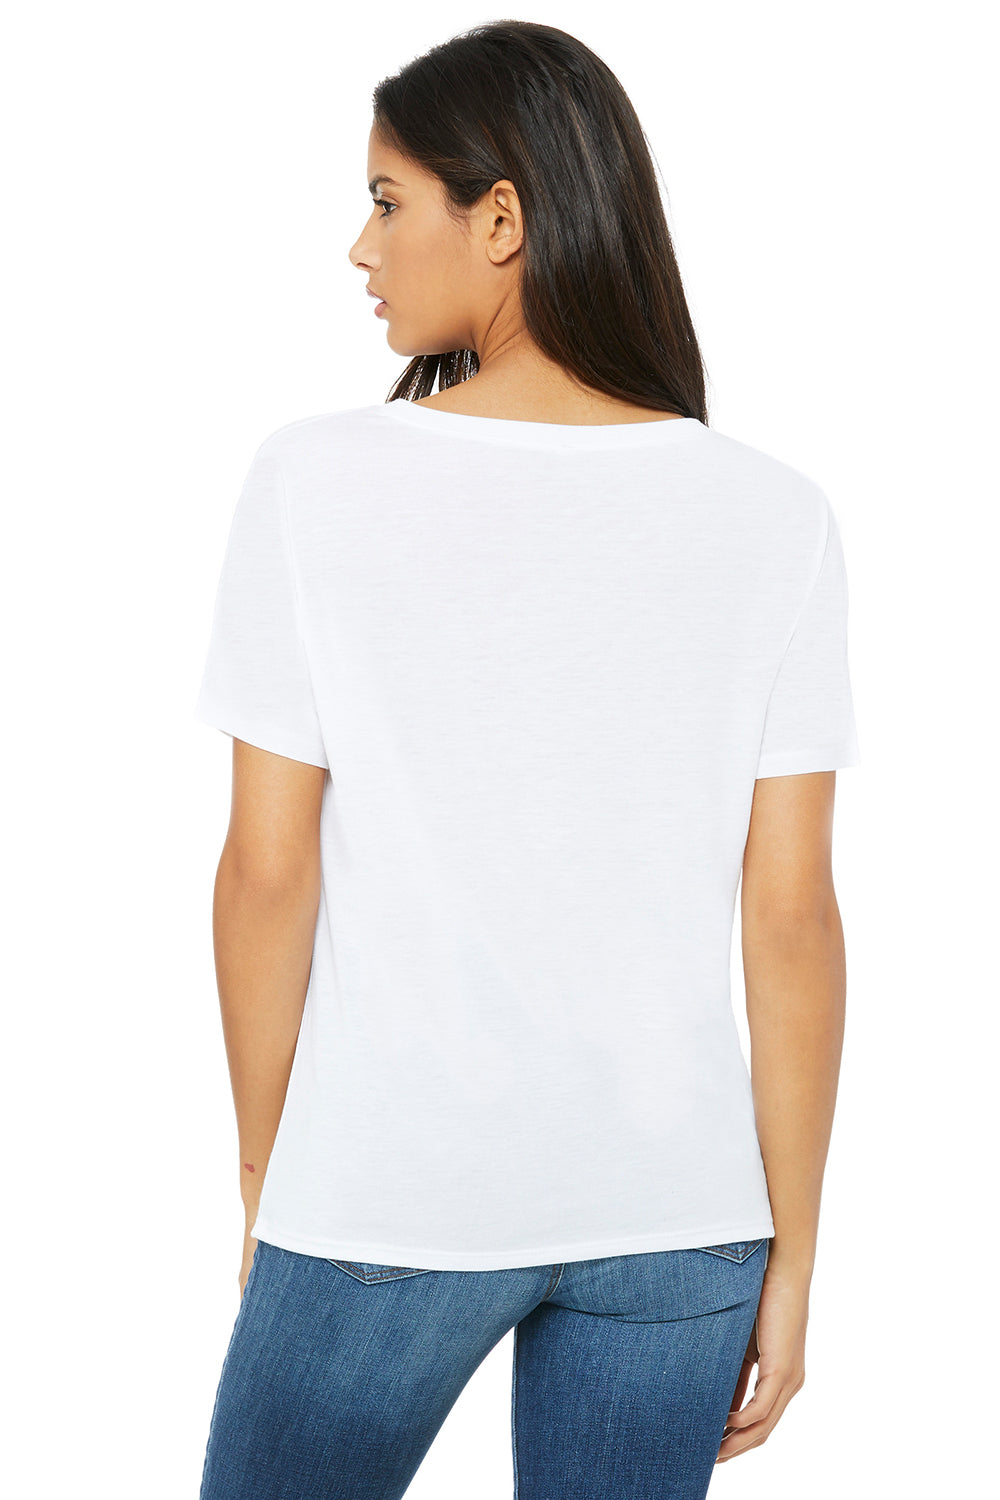 Bella + Canvas 8815 Womens Slouchy Short Sleeve V-Neck T-Shirt White Model Back